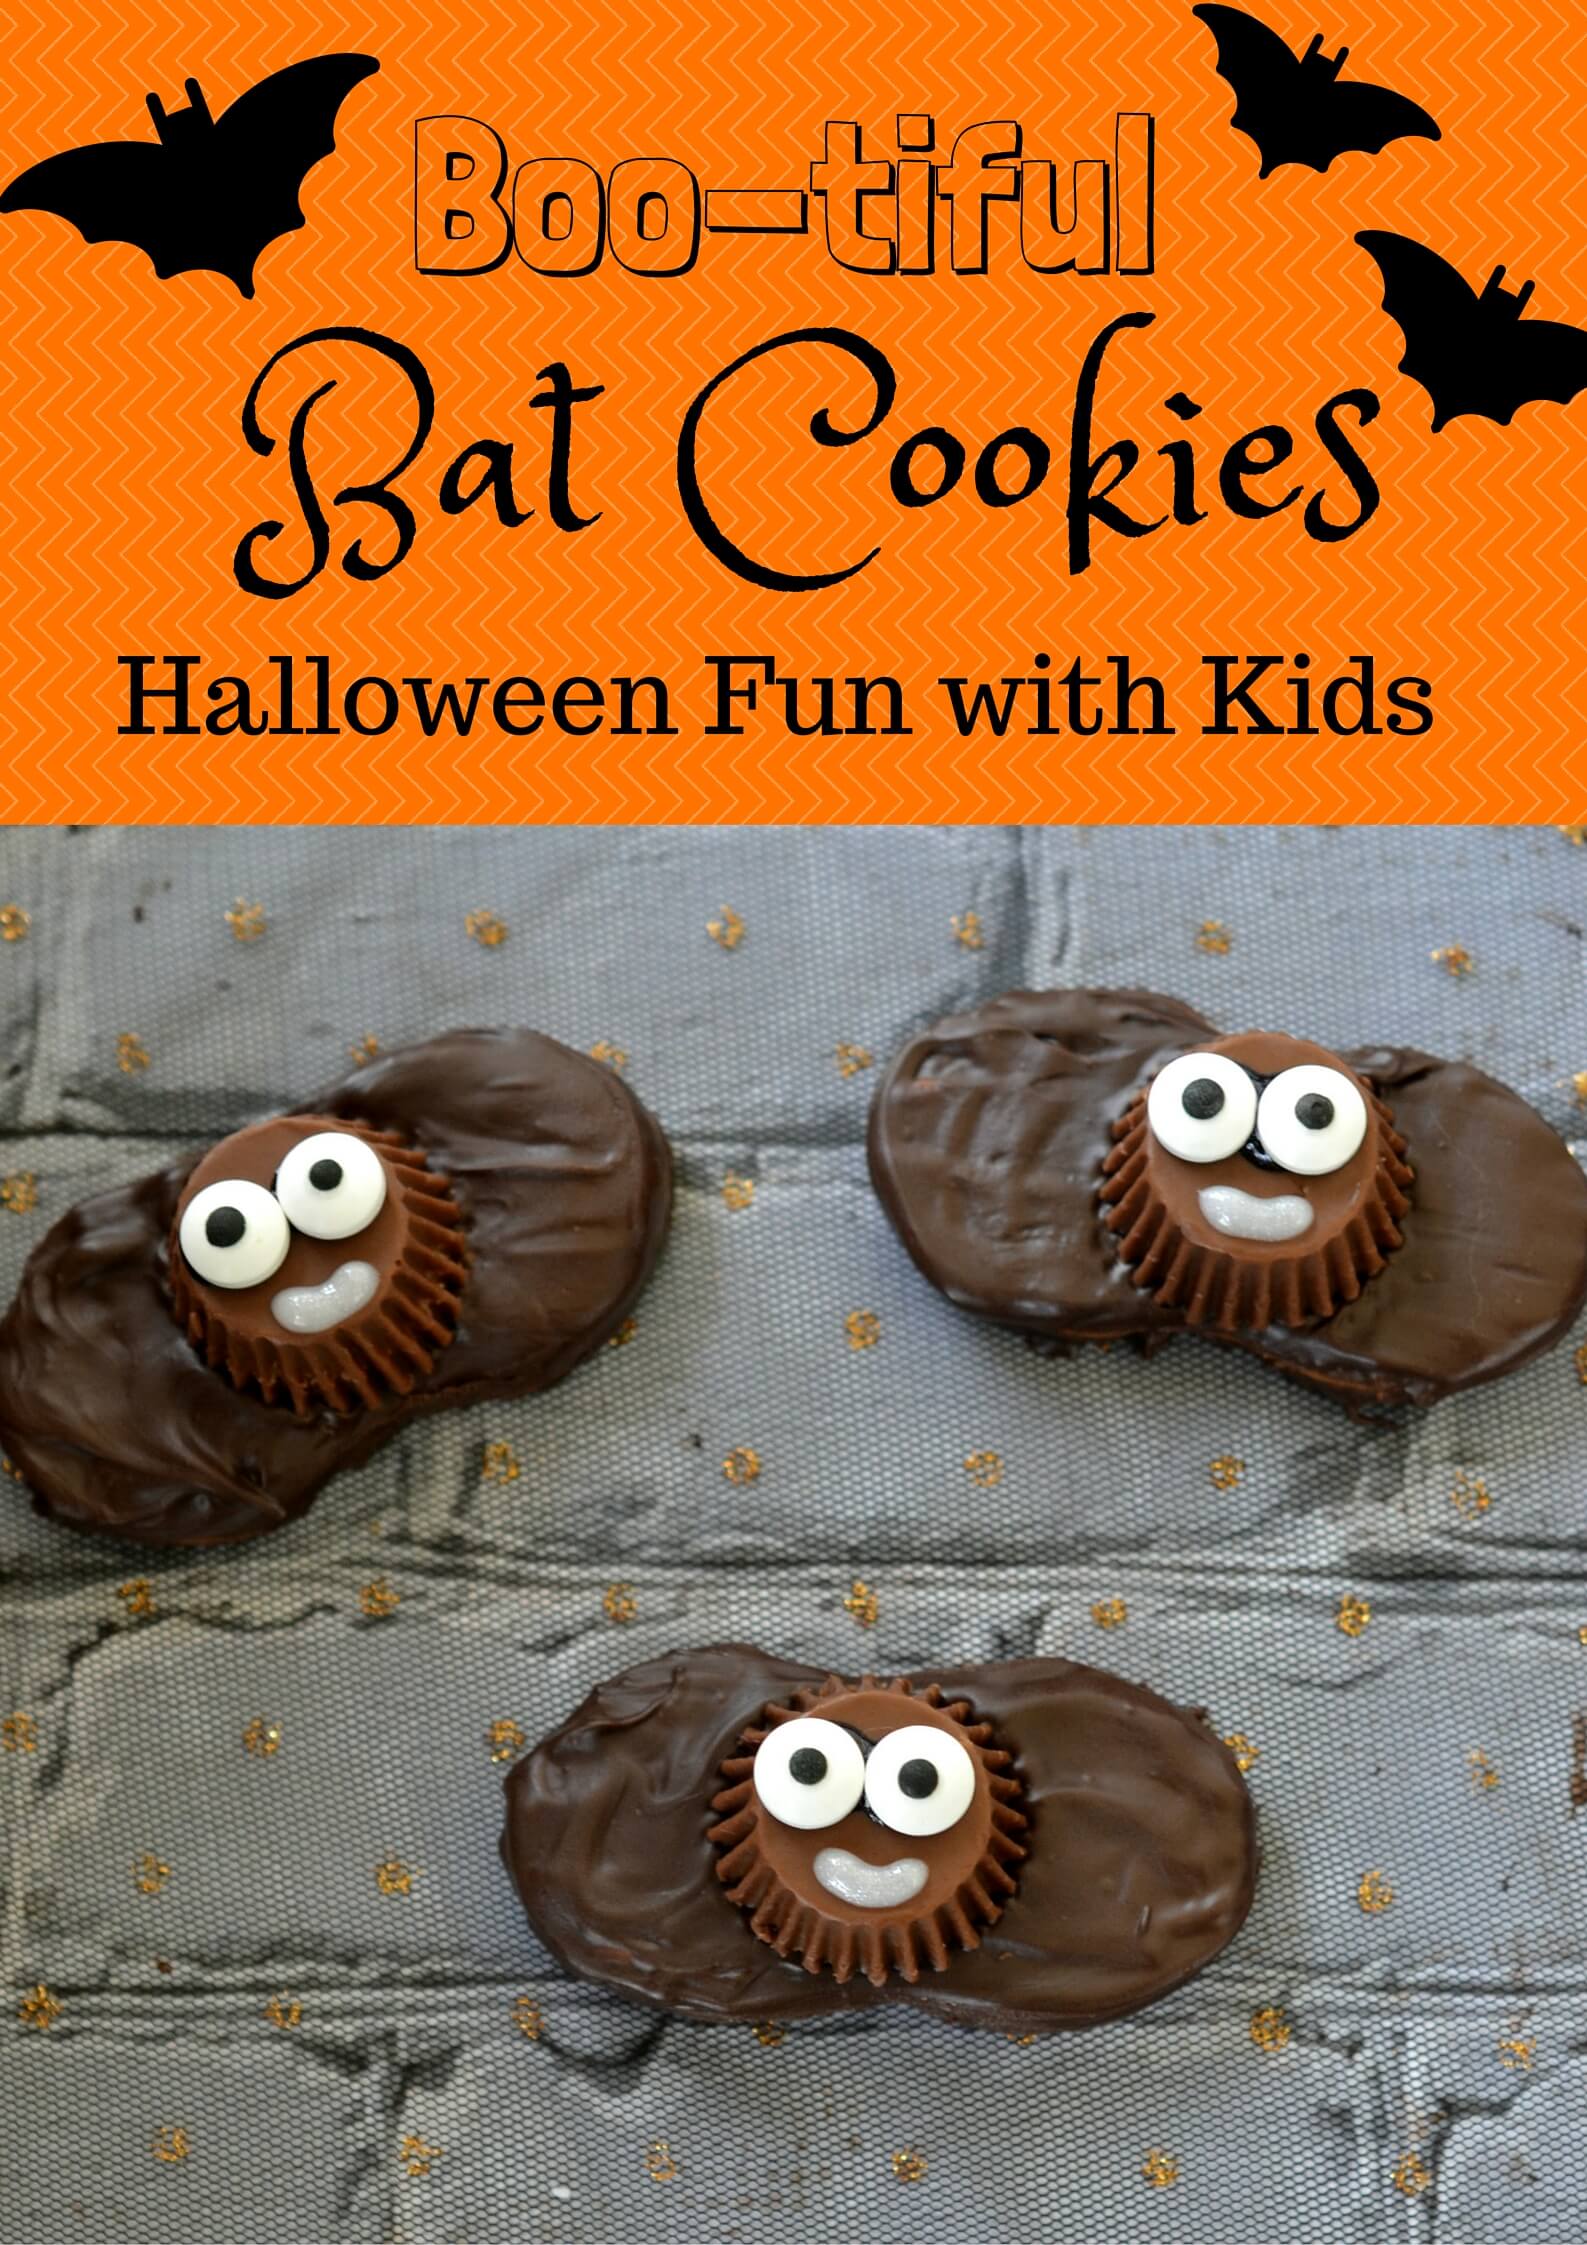 How to Make Boo-tiful Bat Halloween Cookies